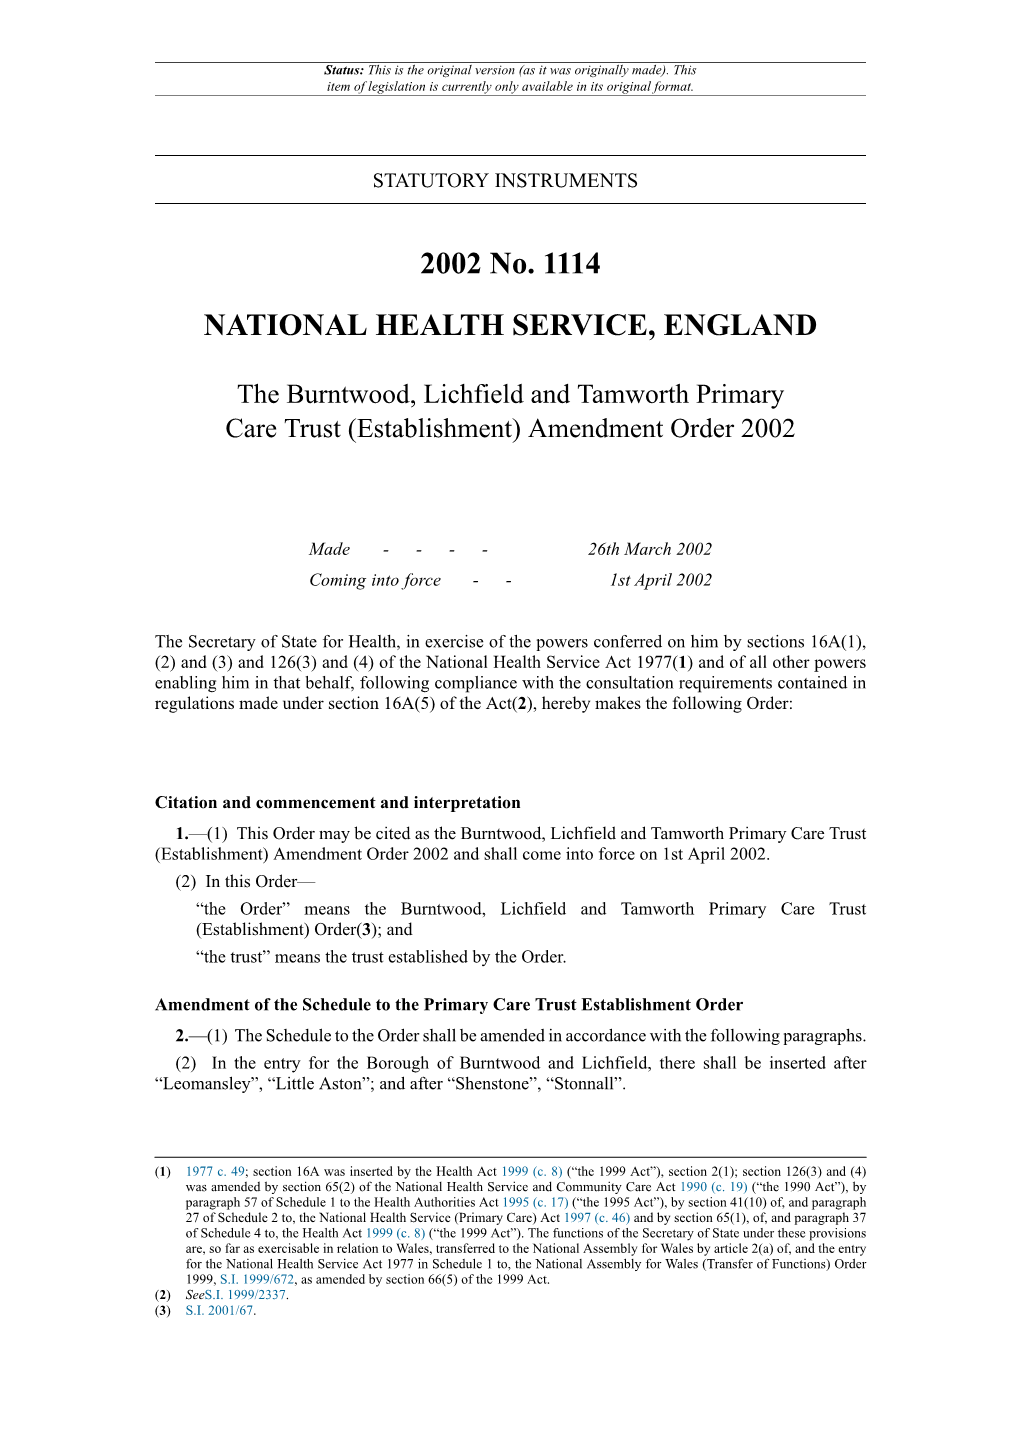 The Burntwood, Lichfield and Tamworth Primary Care Trust (Establishment) Amendment Order 2002